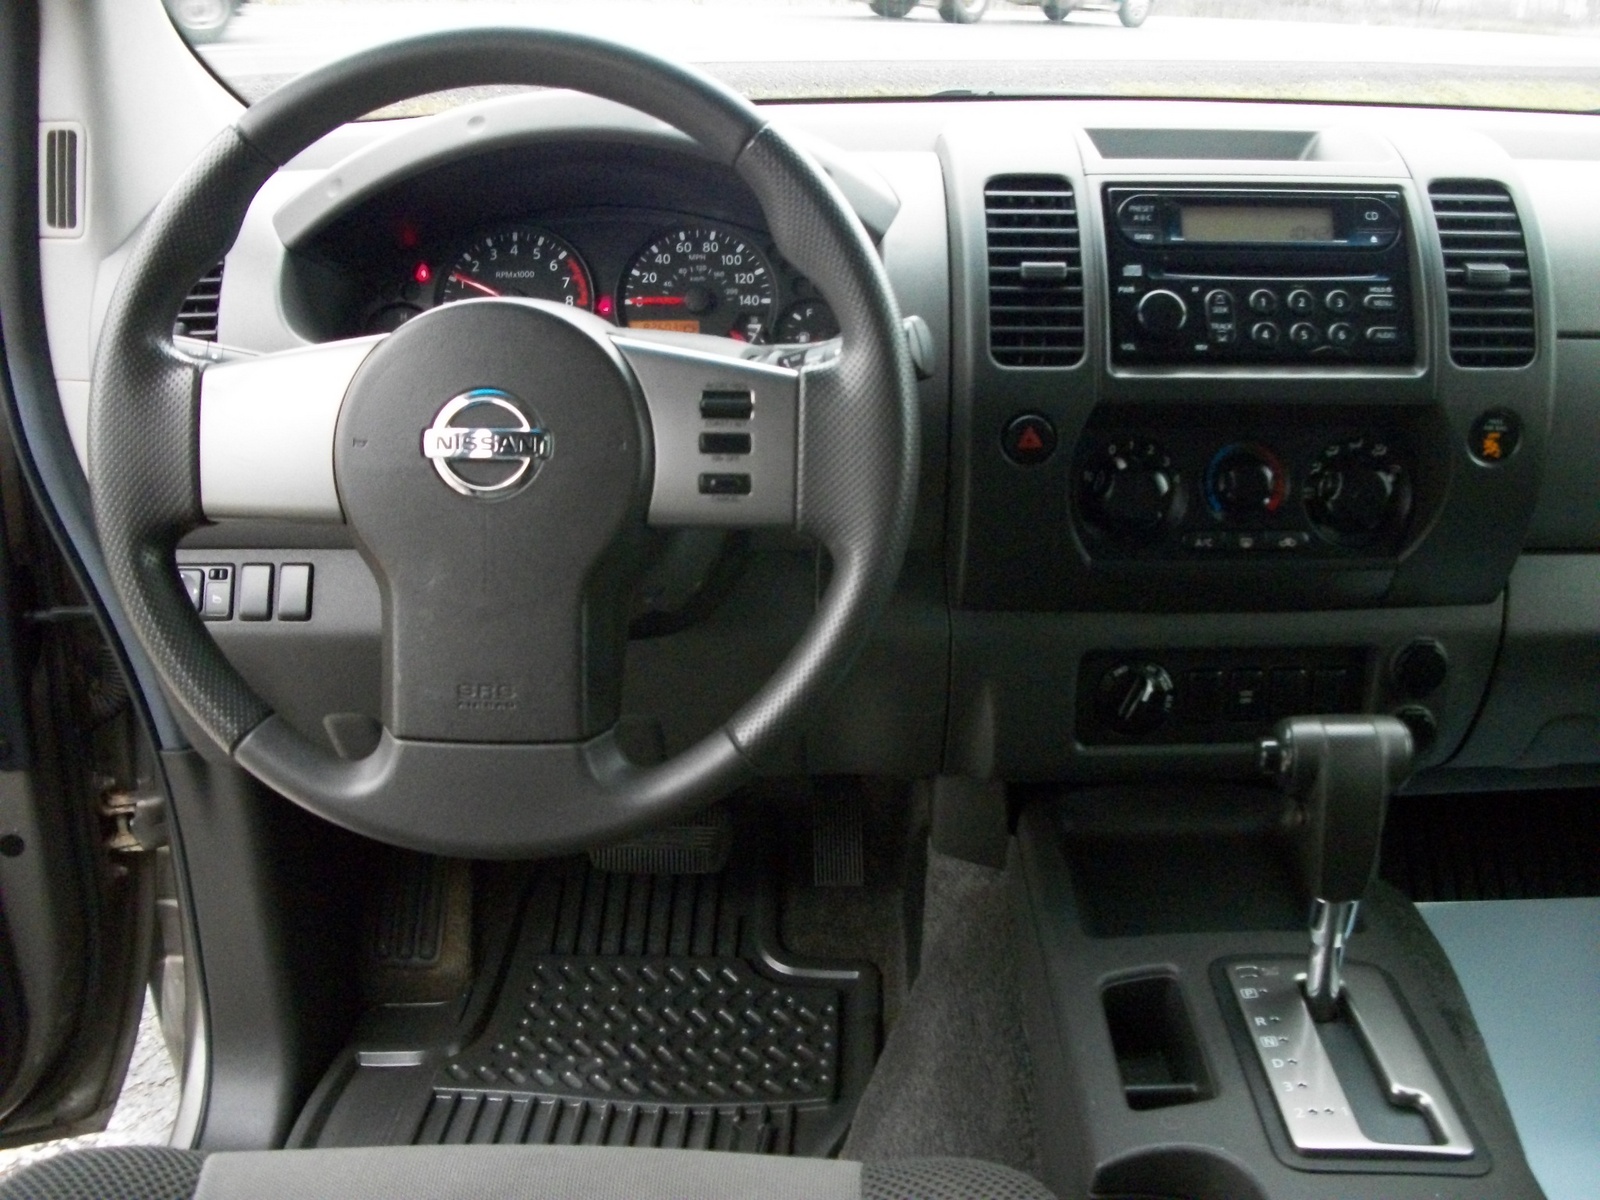 2005 Nissan xterra interior dimensions